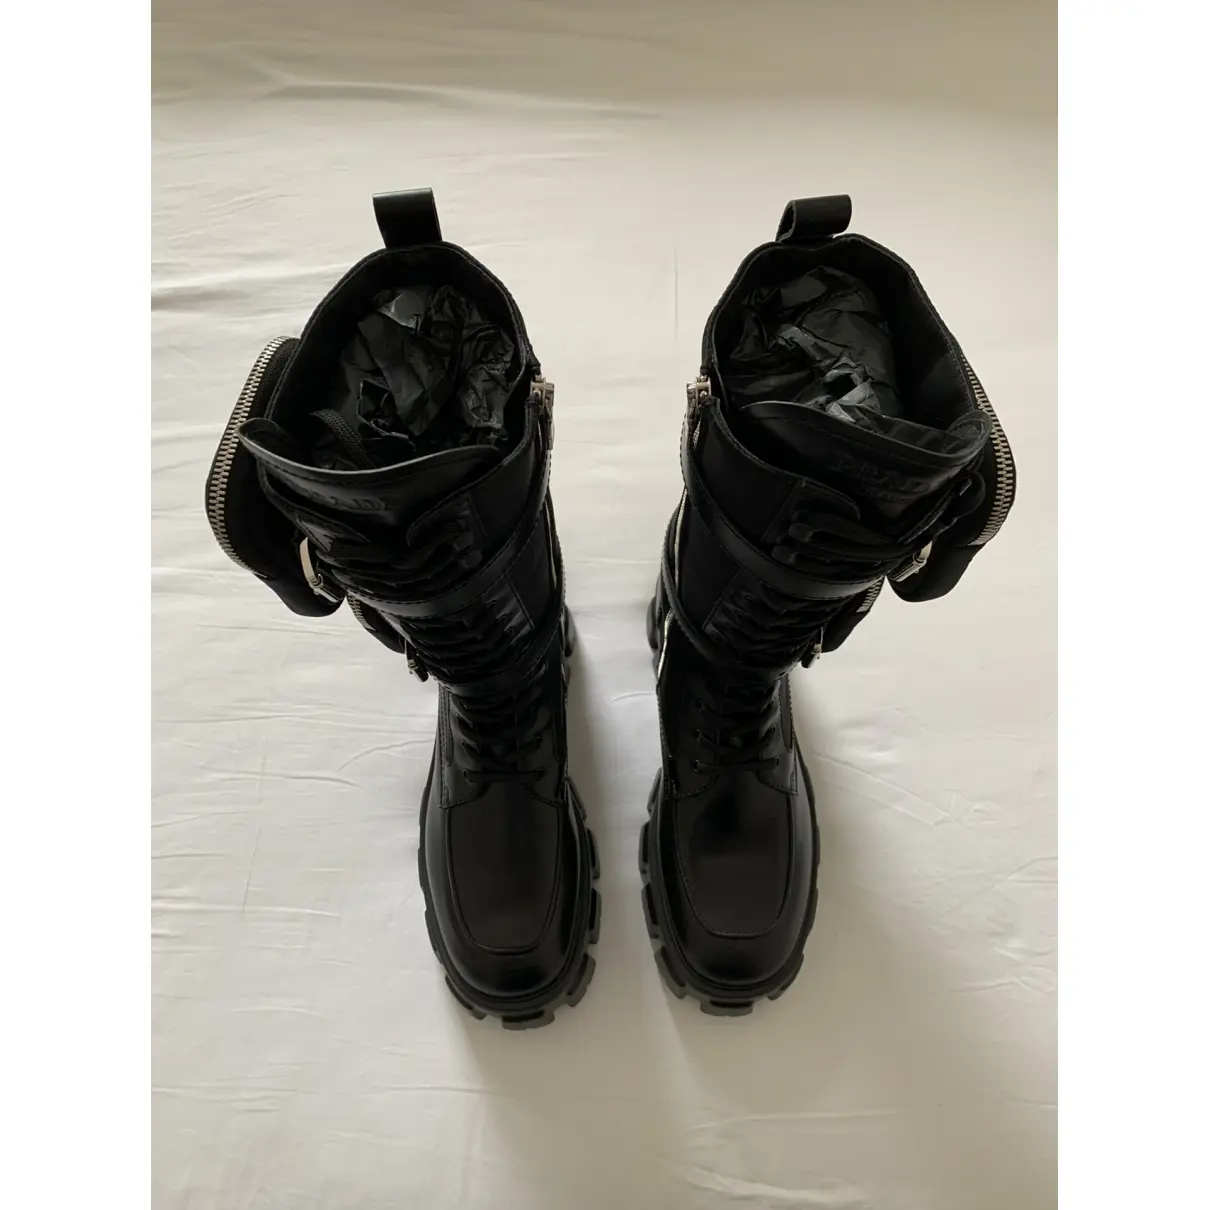 Buy Prada Monolith leather boots online